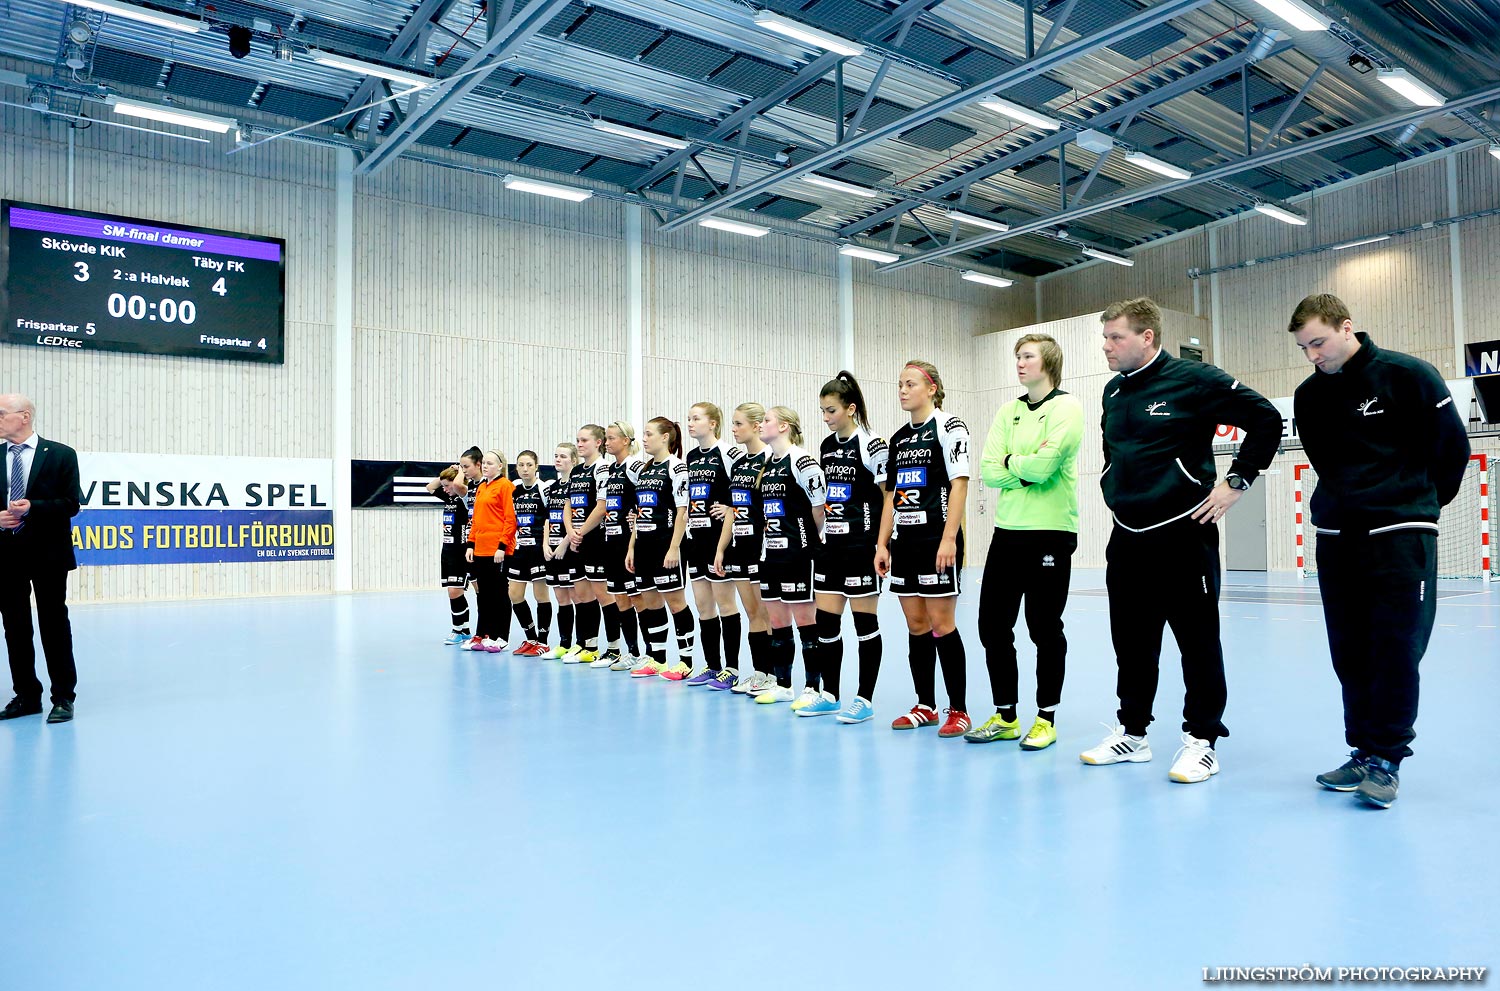 Skövde KIK-Täby FK SM-FINAL 3-4,dam,Hammarö Arena,Karlstad,Sverige,Futsal,,2015,104553